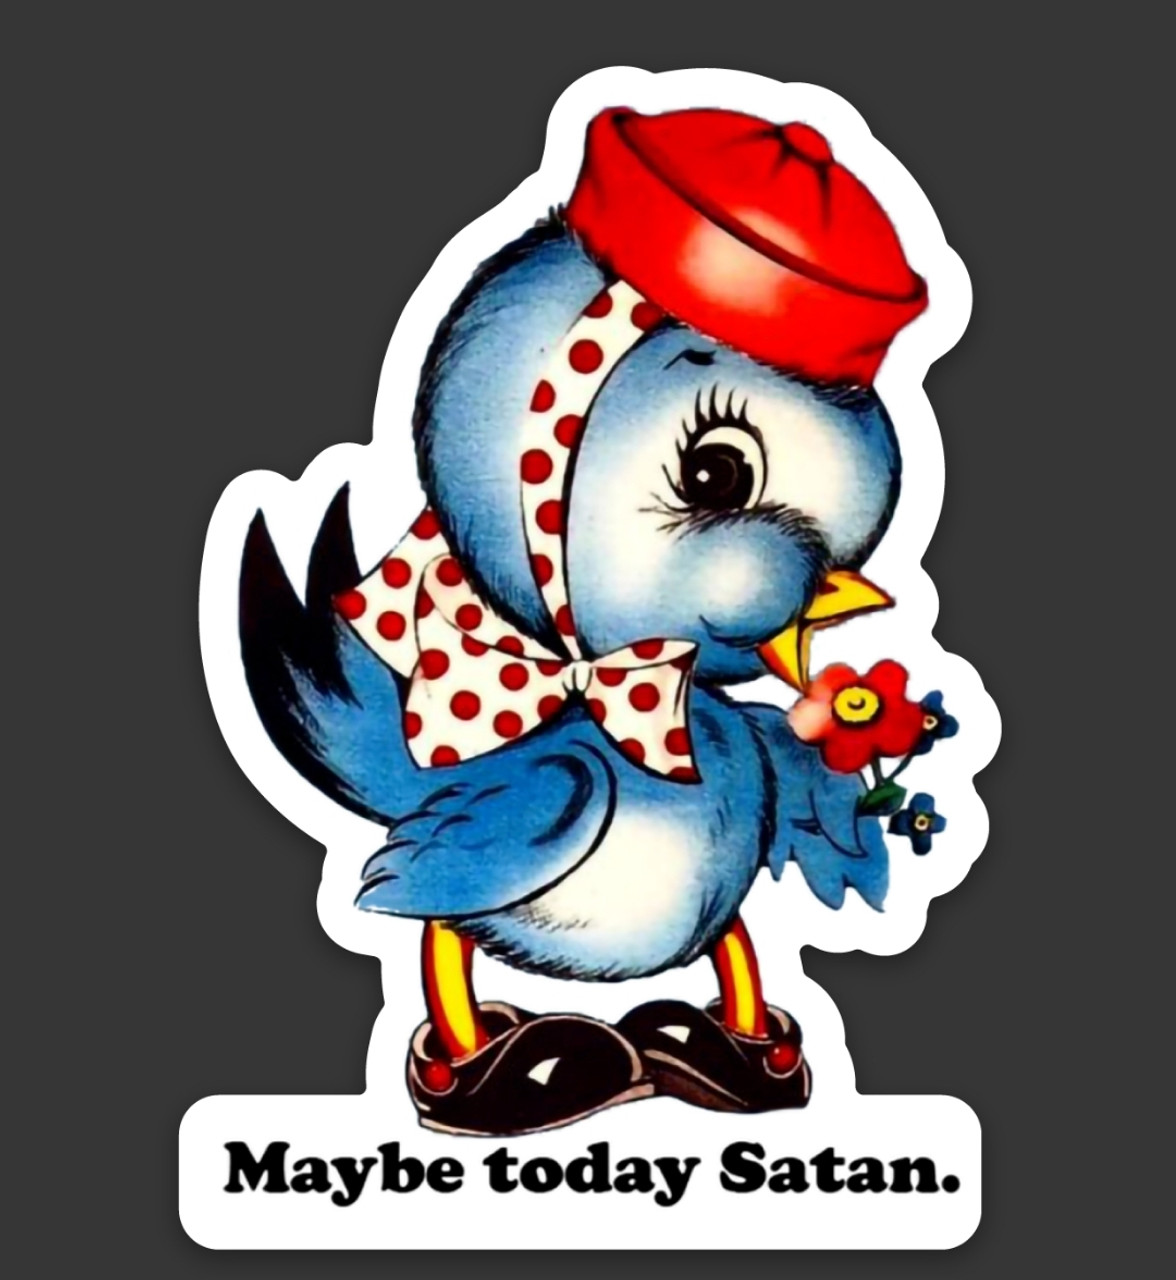 2-pack Maybe Today Satan Vinyl Decals - Cute Blue Bird in Red Hat Die Cut Stickers